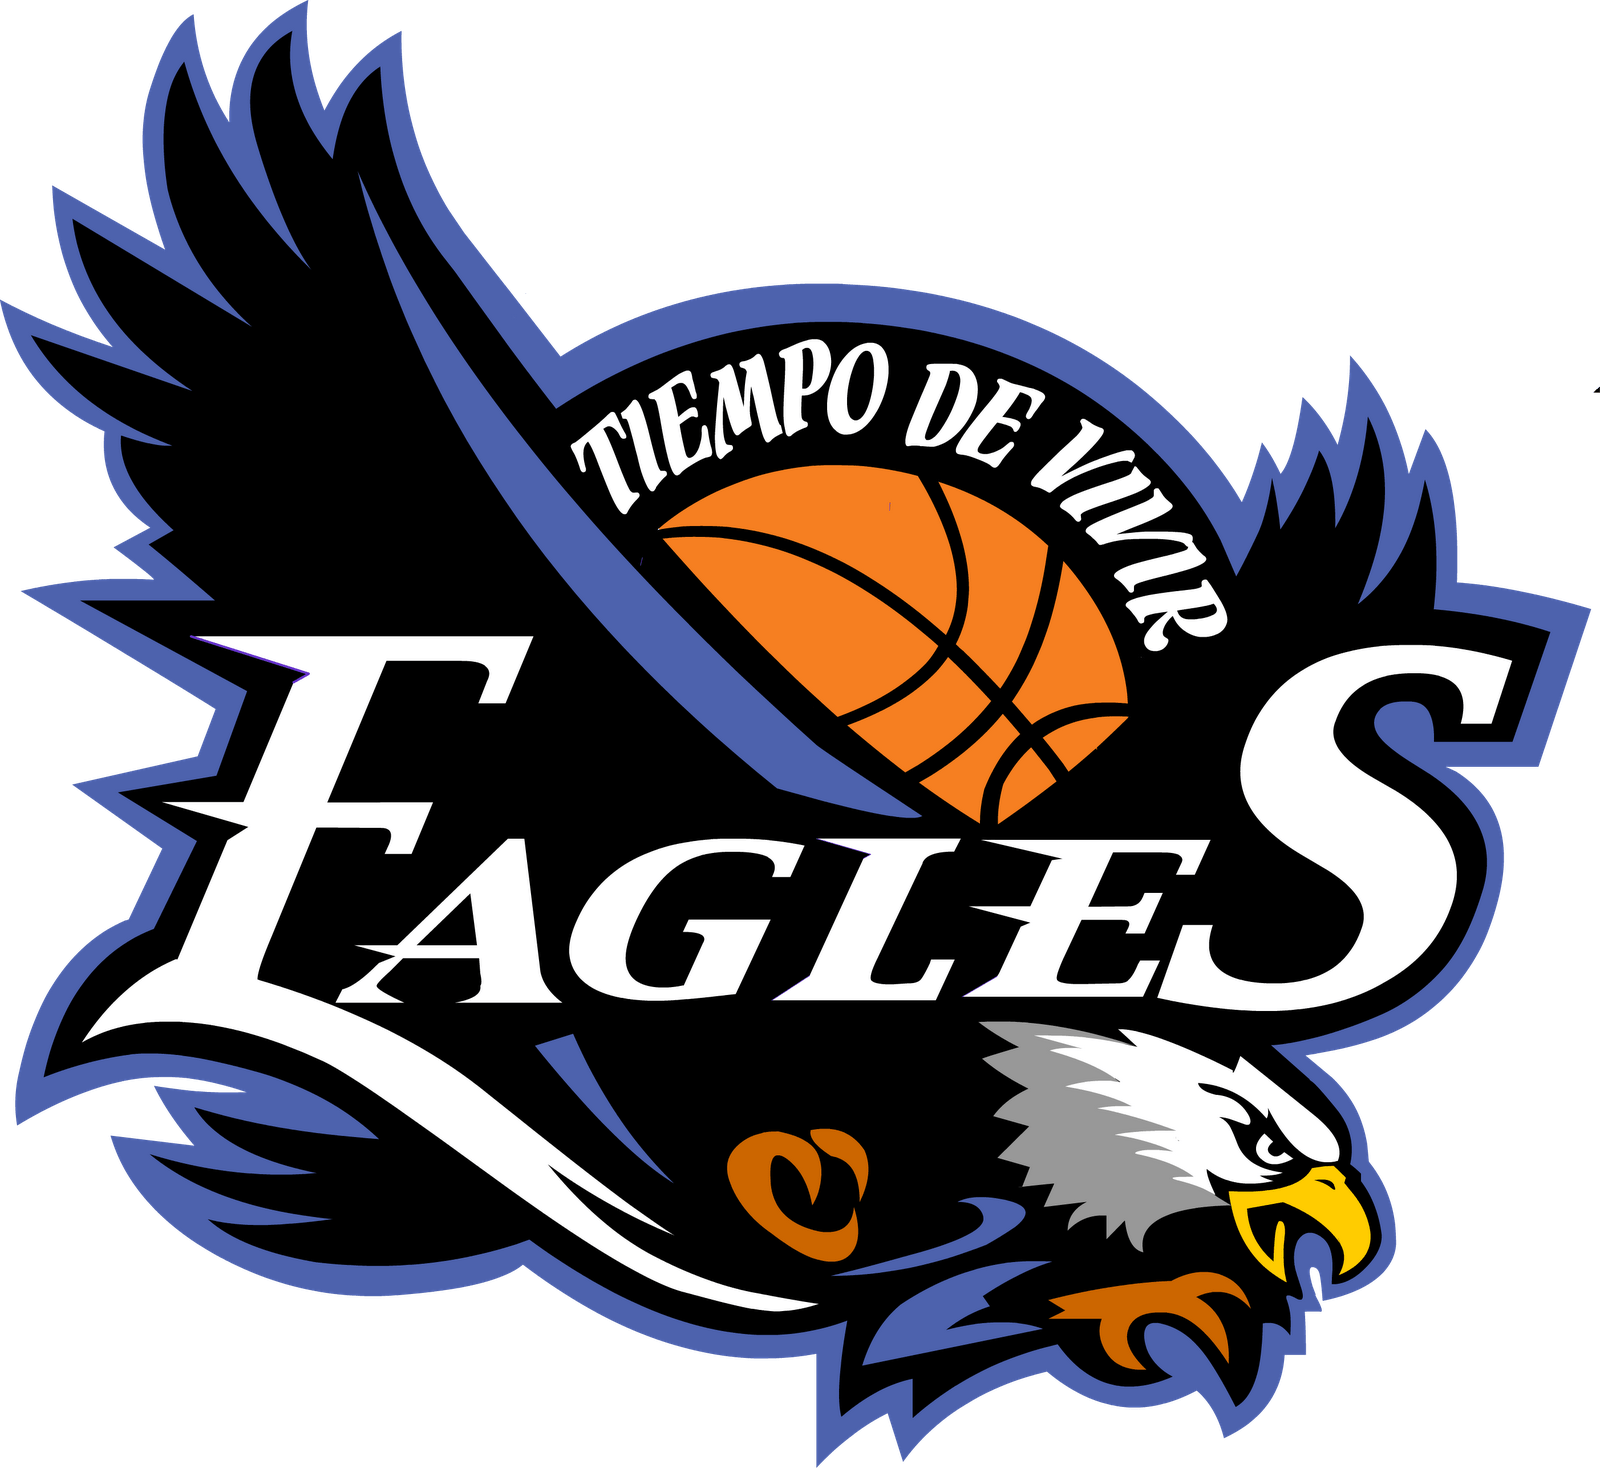 Clip Art Eagles Logo - Eagles Basketball Team Logo Clipart. Sport Logos. Logos, Team logo